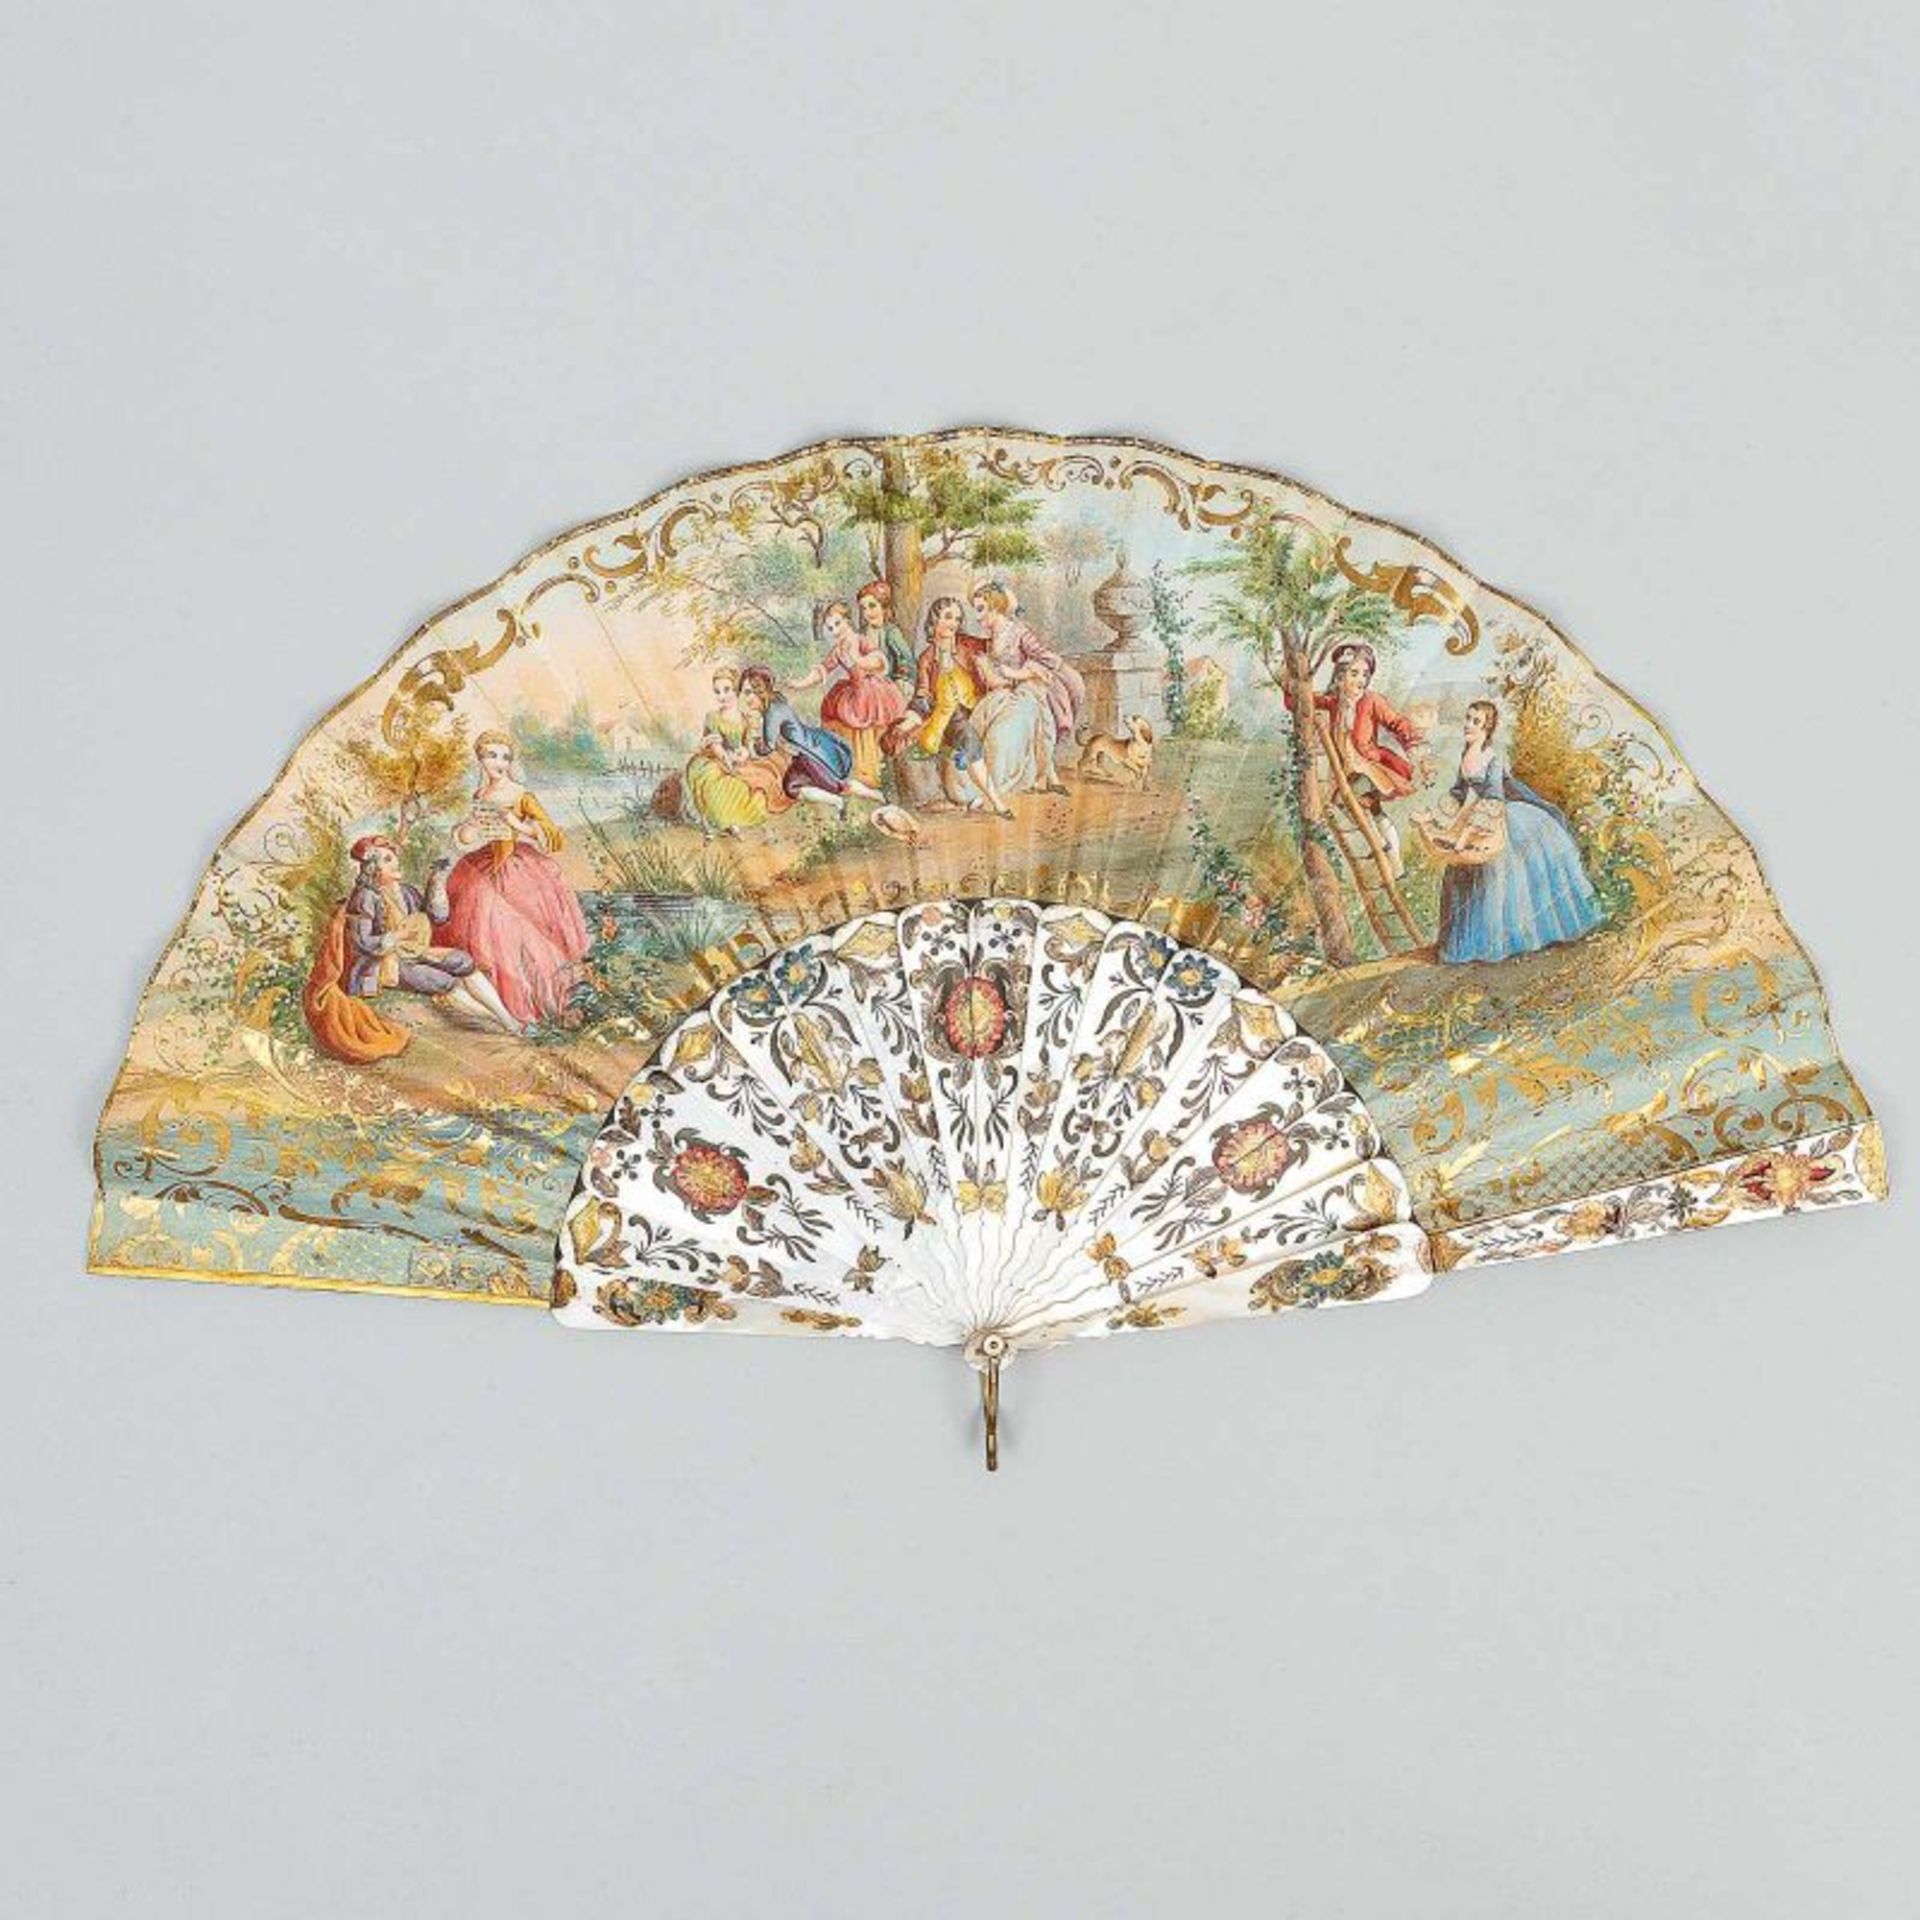 Abanico con varillaje en nácar y país pintado a mano con escena de galanteo. Siglo XIX. 27 x 52 cms.